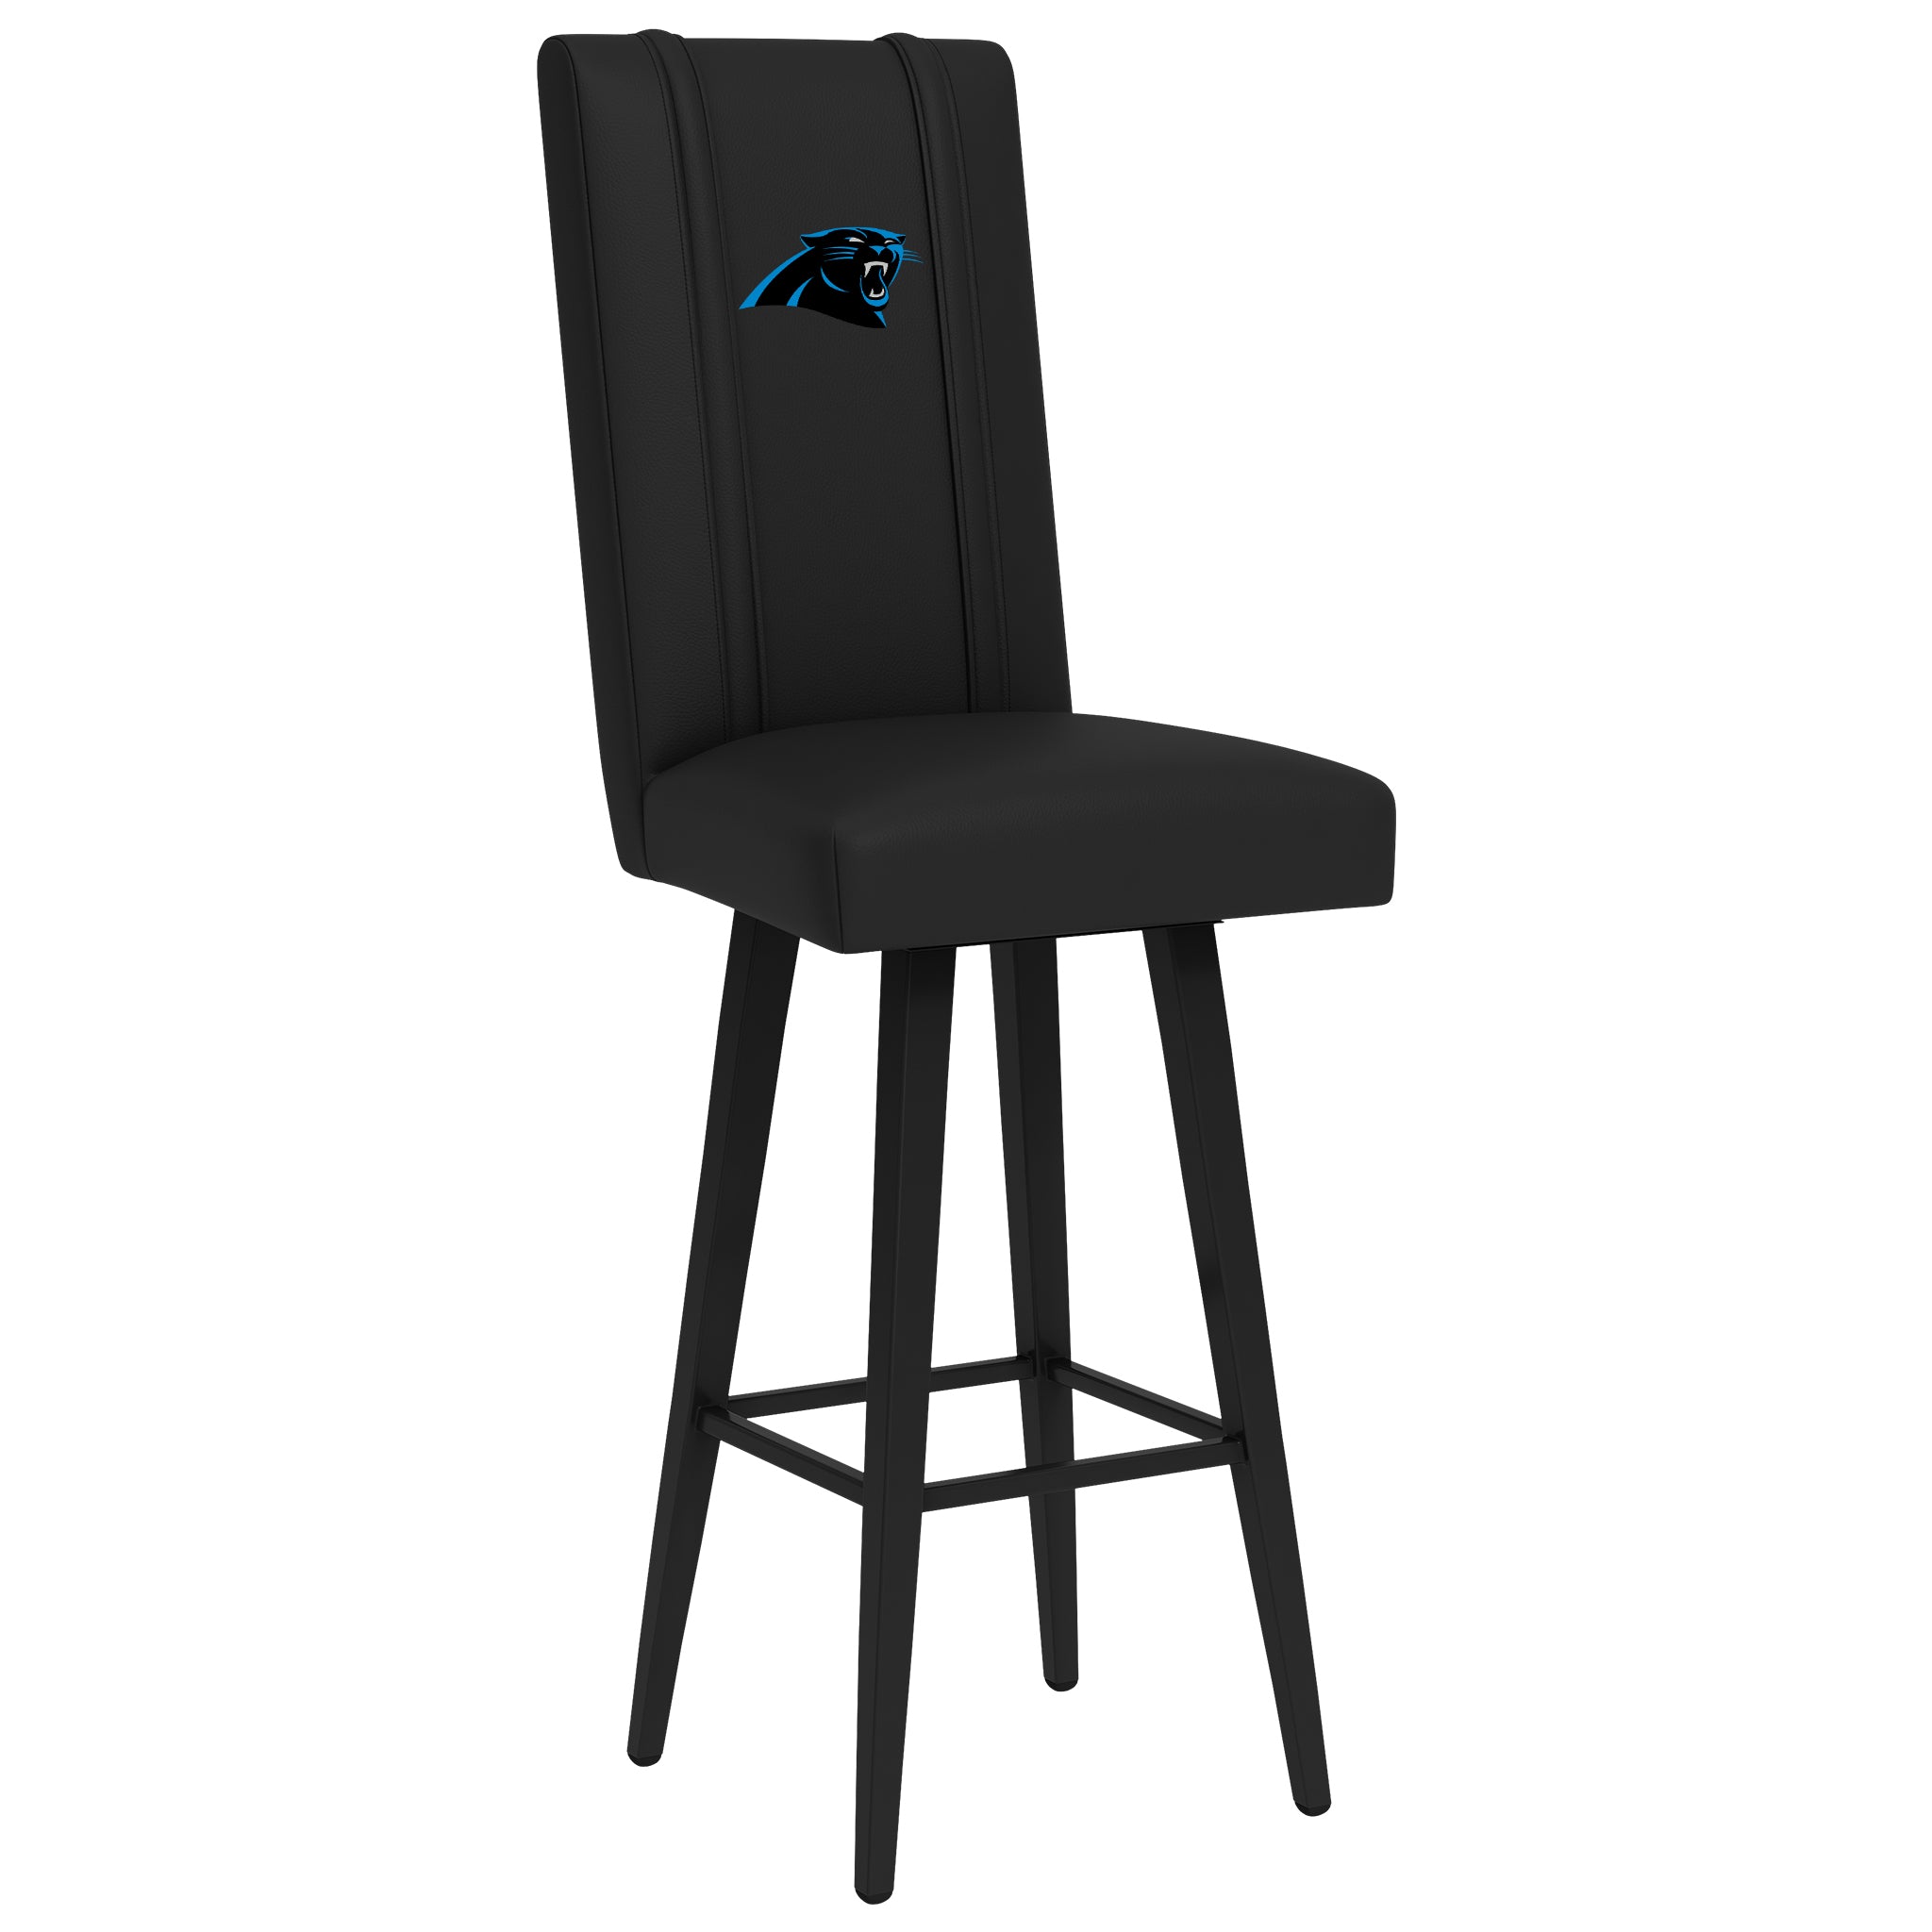 Carolina Panthers Swivel Bar Stool - Chair - Furniture - Kitchen